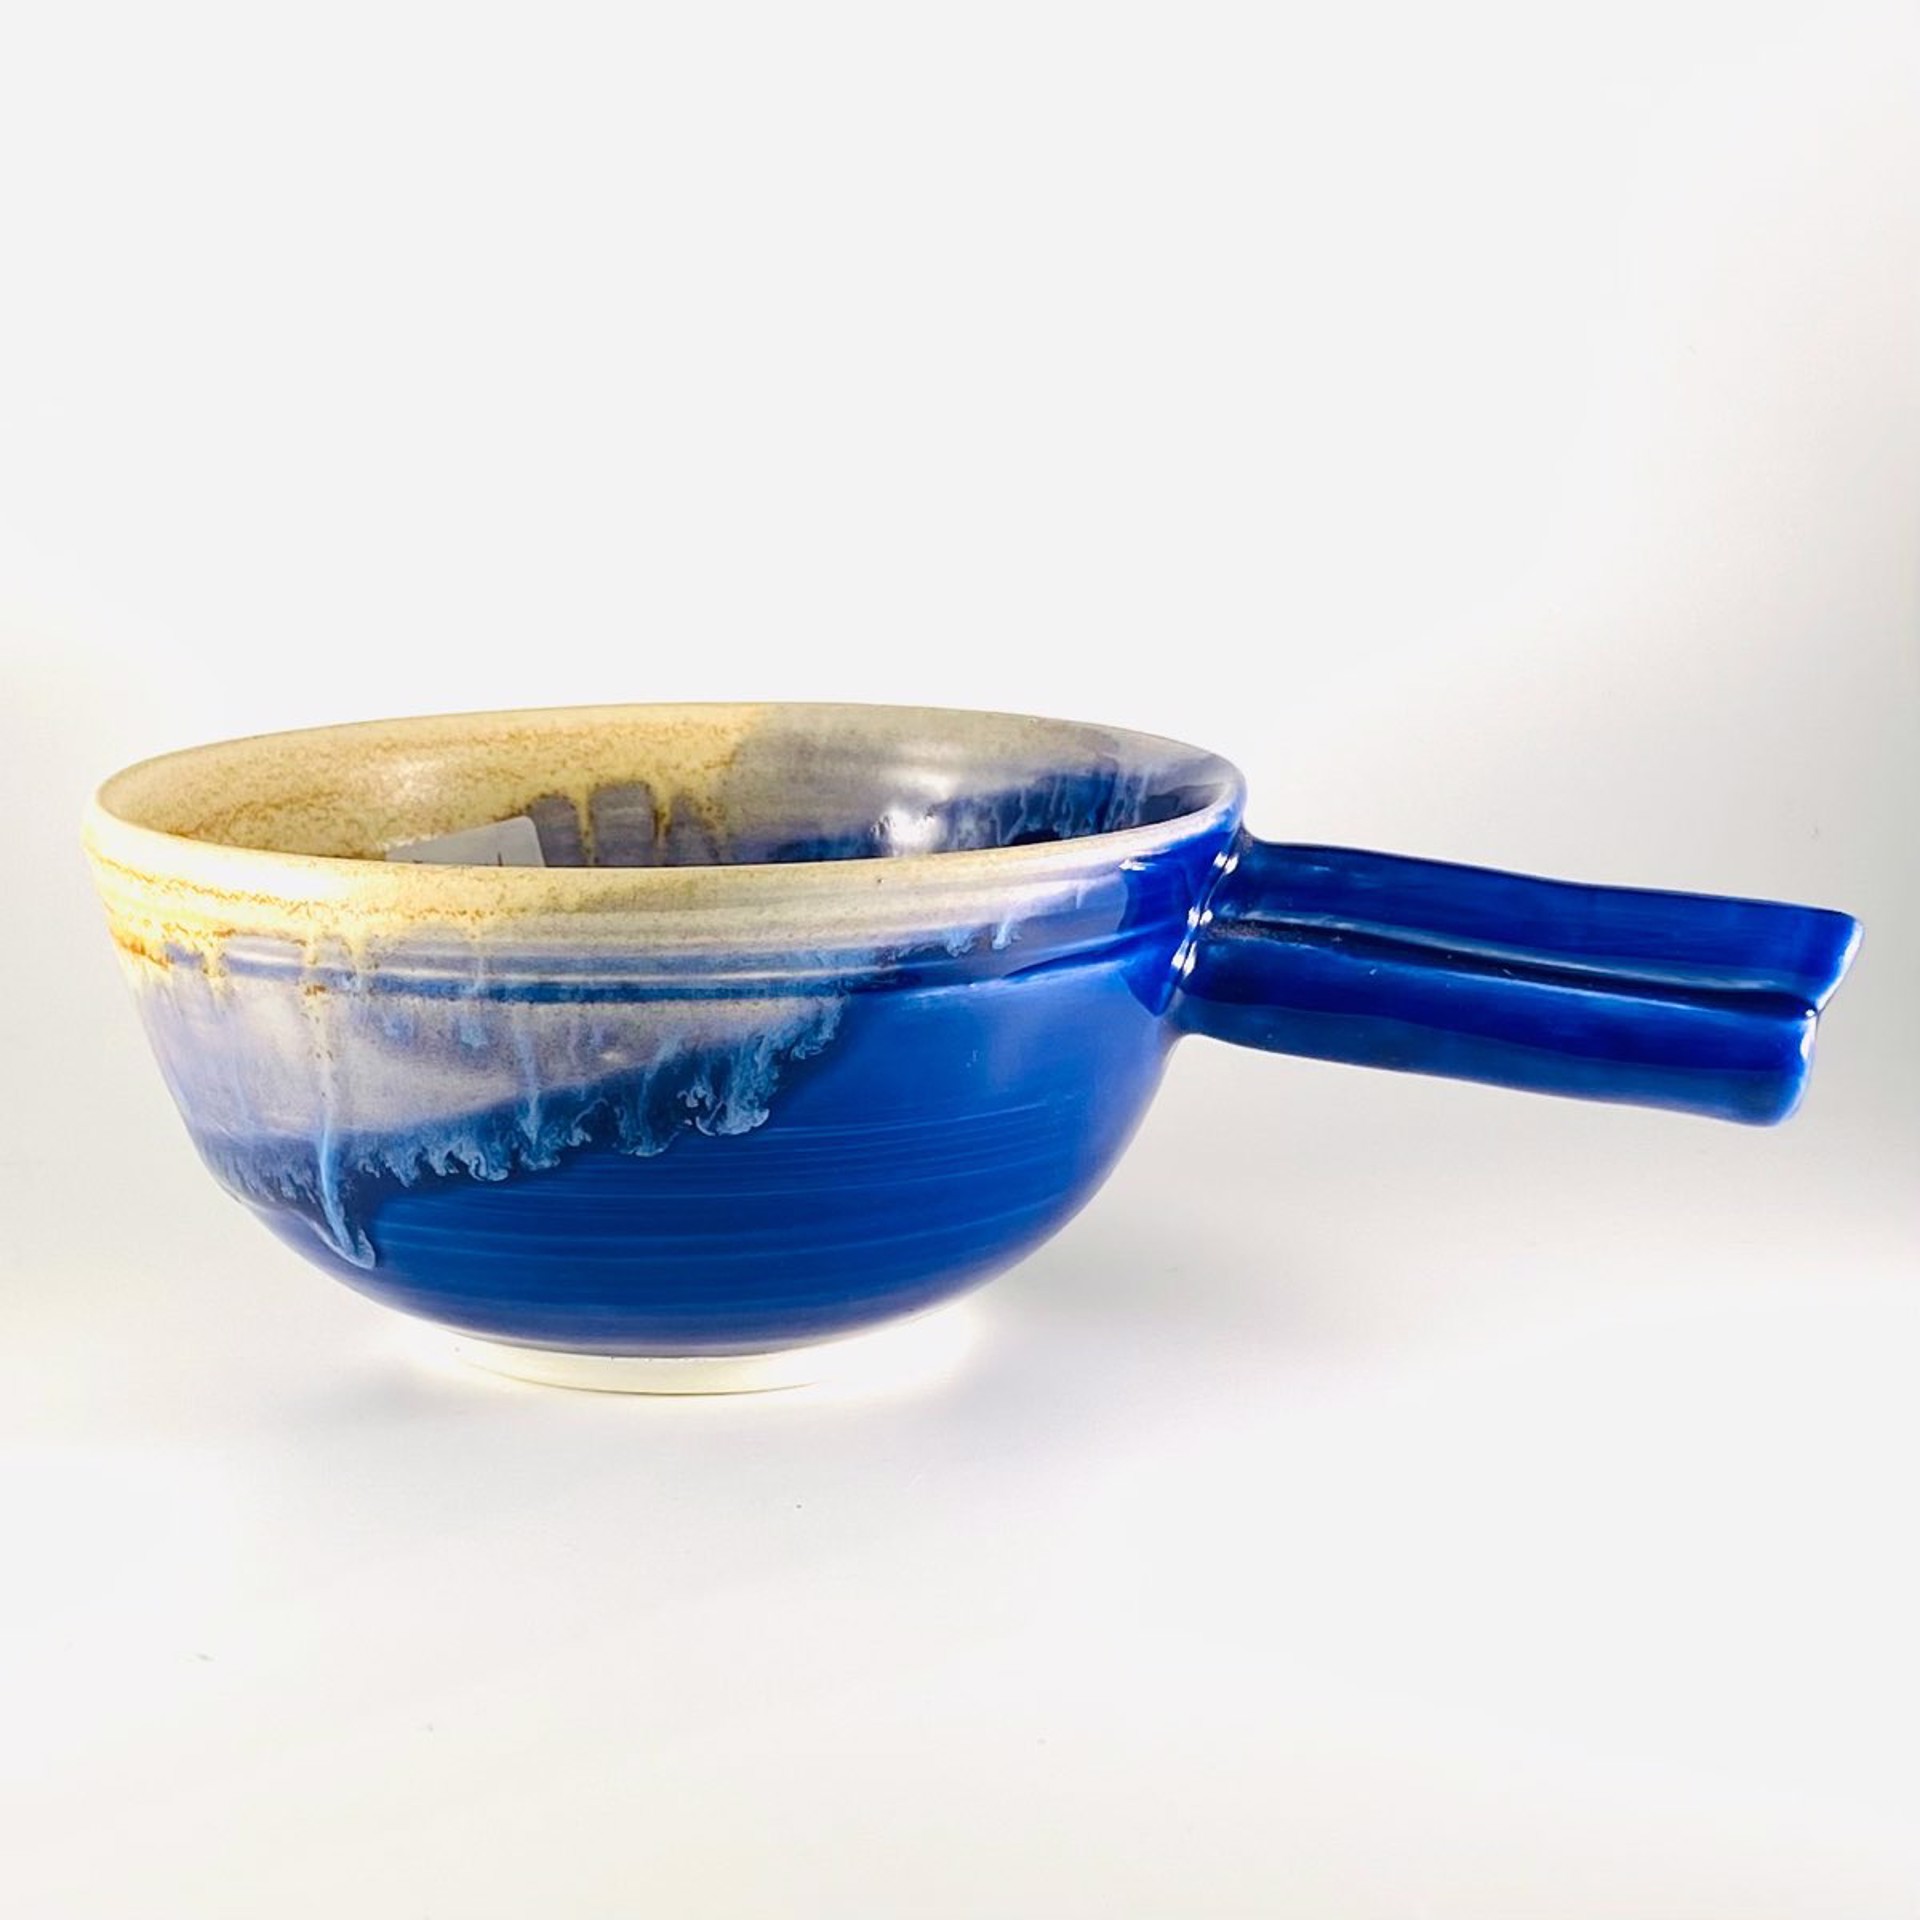 IO22-10 Cobalt Soup Bowl with Handle by Ilene Olanoff